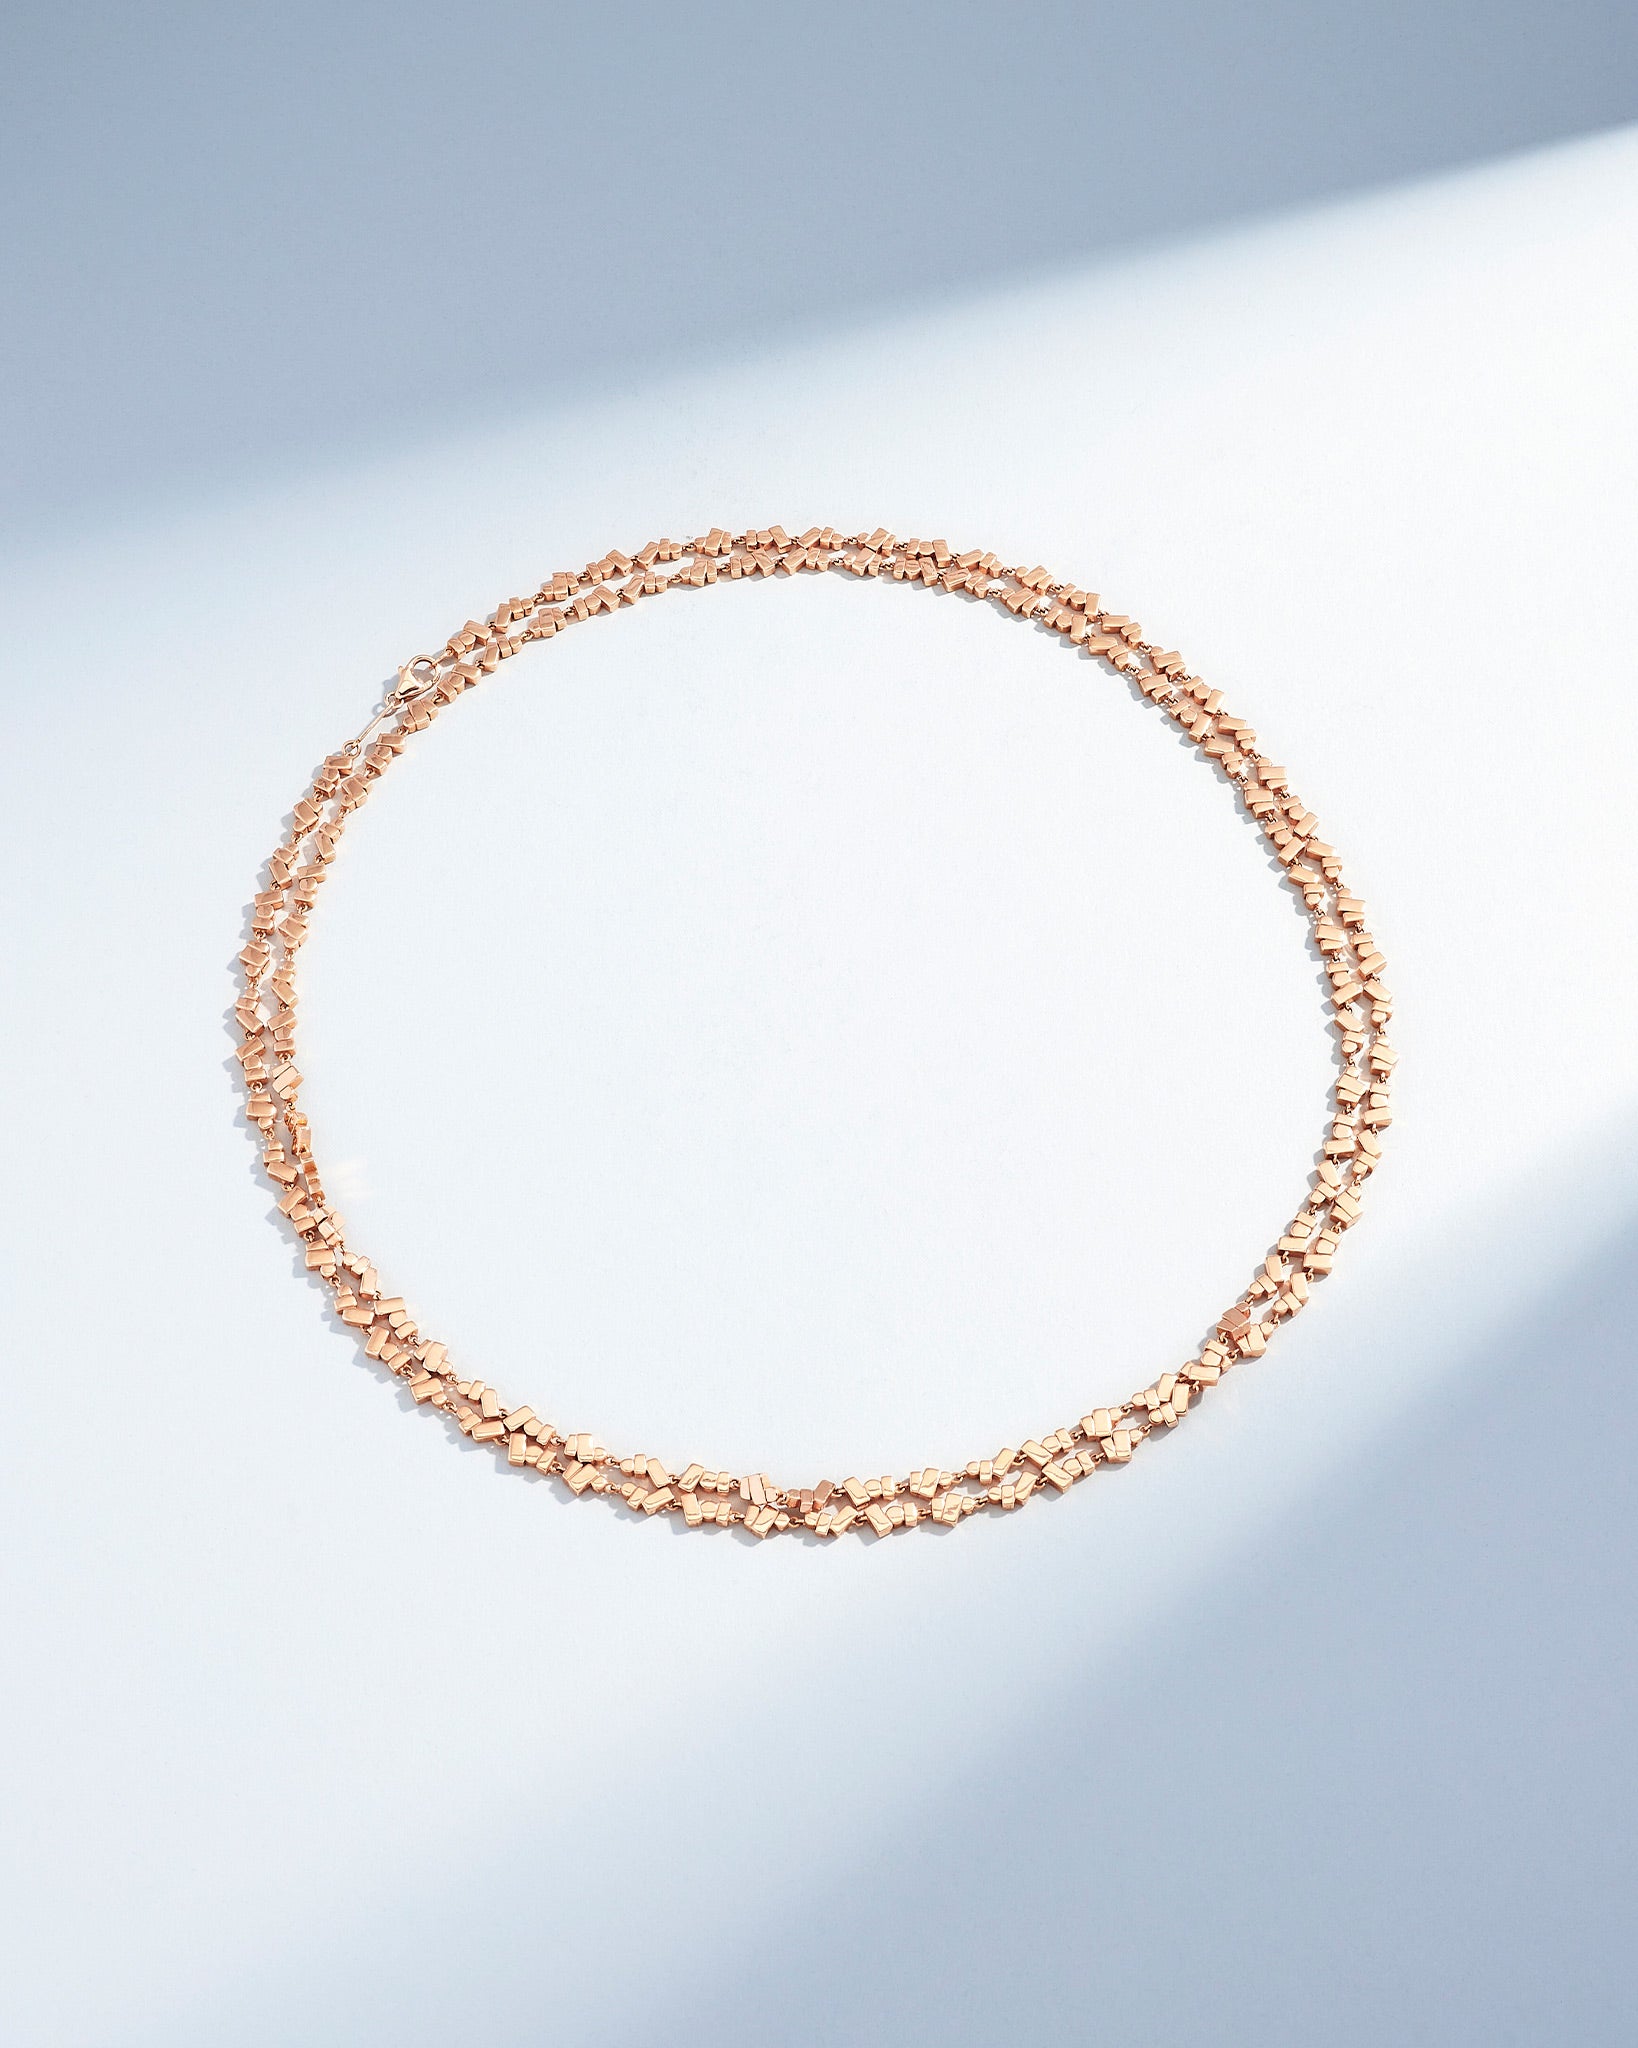 Suzanne Kalan Golden Cluster 36" Inch Tennis Necklace in 18k rose gold